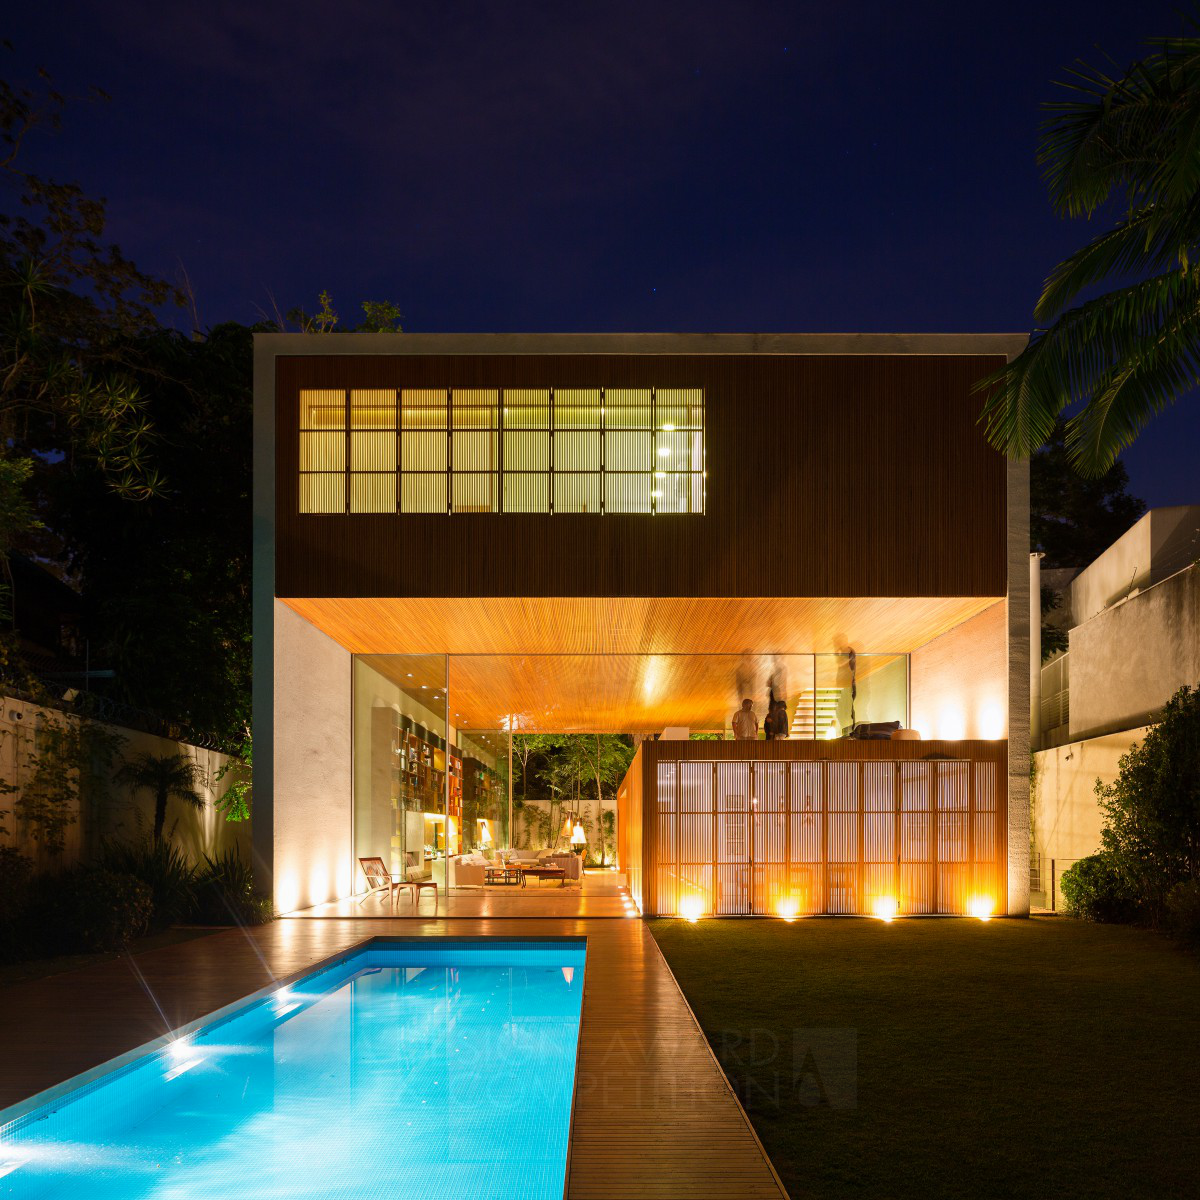 Tetris Residential House by studiomk27